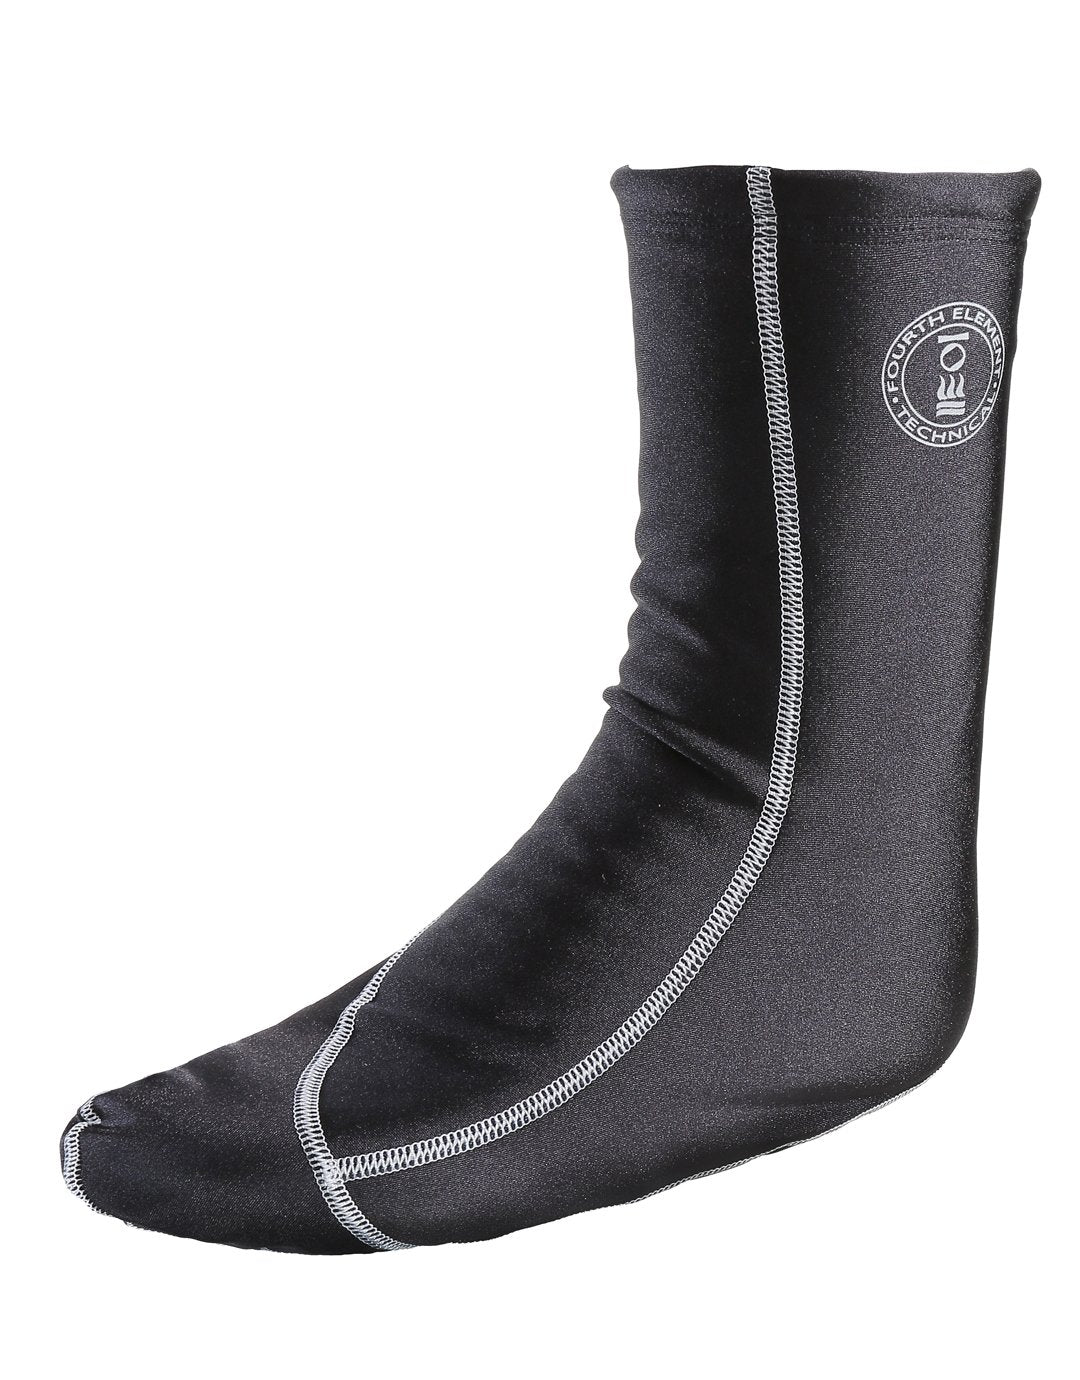 Fourth Element Hotfoot Pro Drysuit Sock | Simply Scuba UK